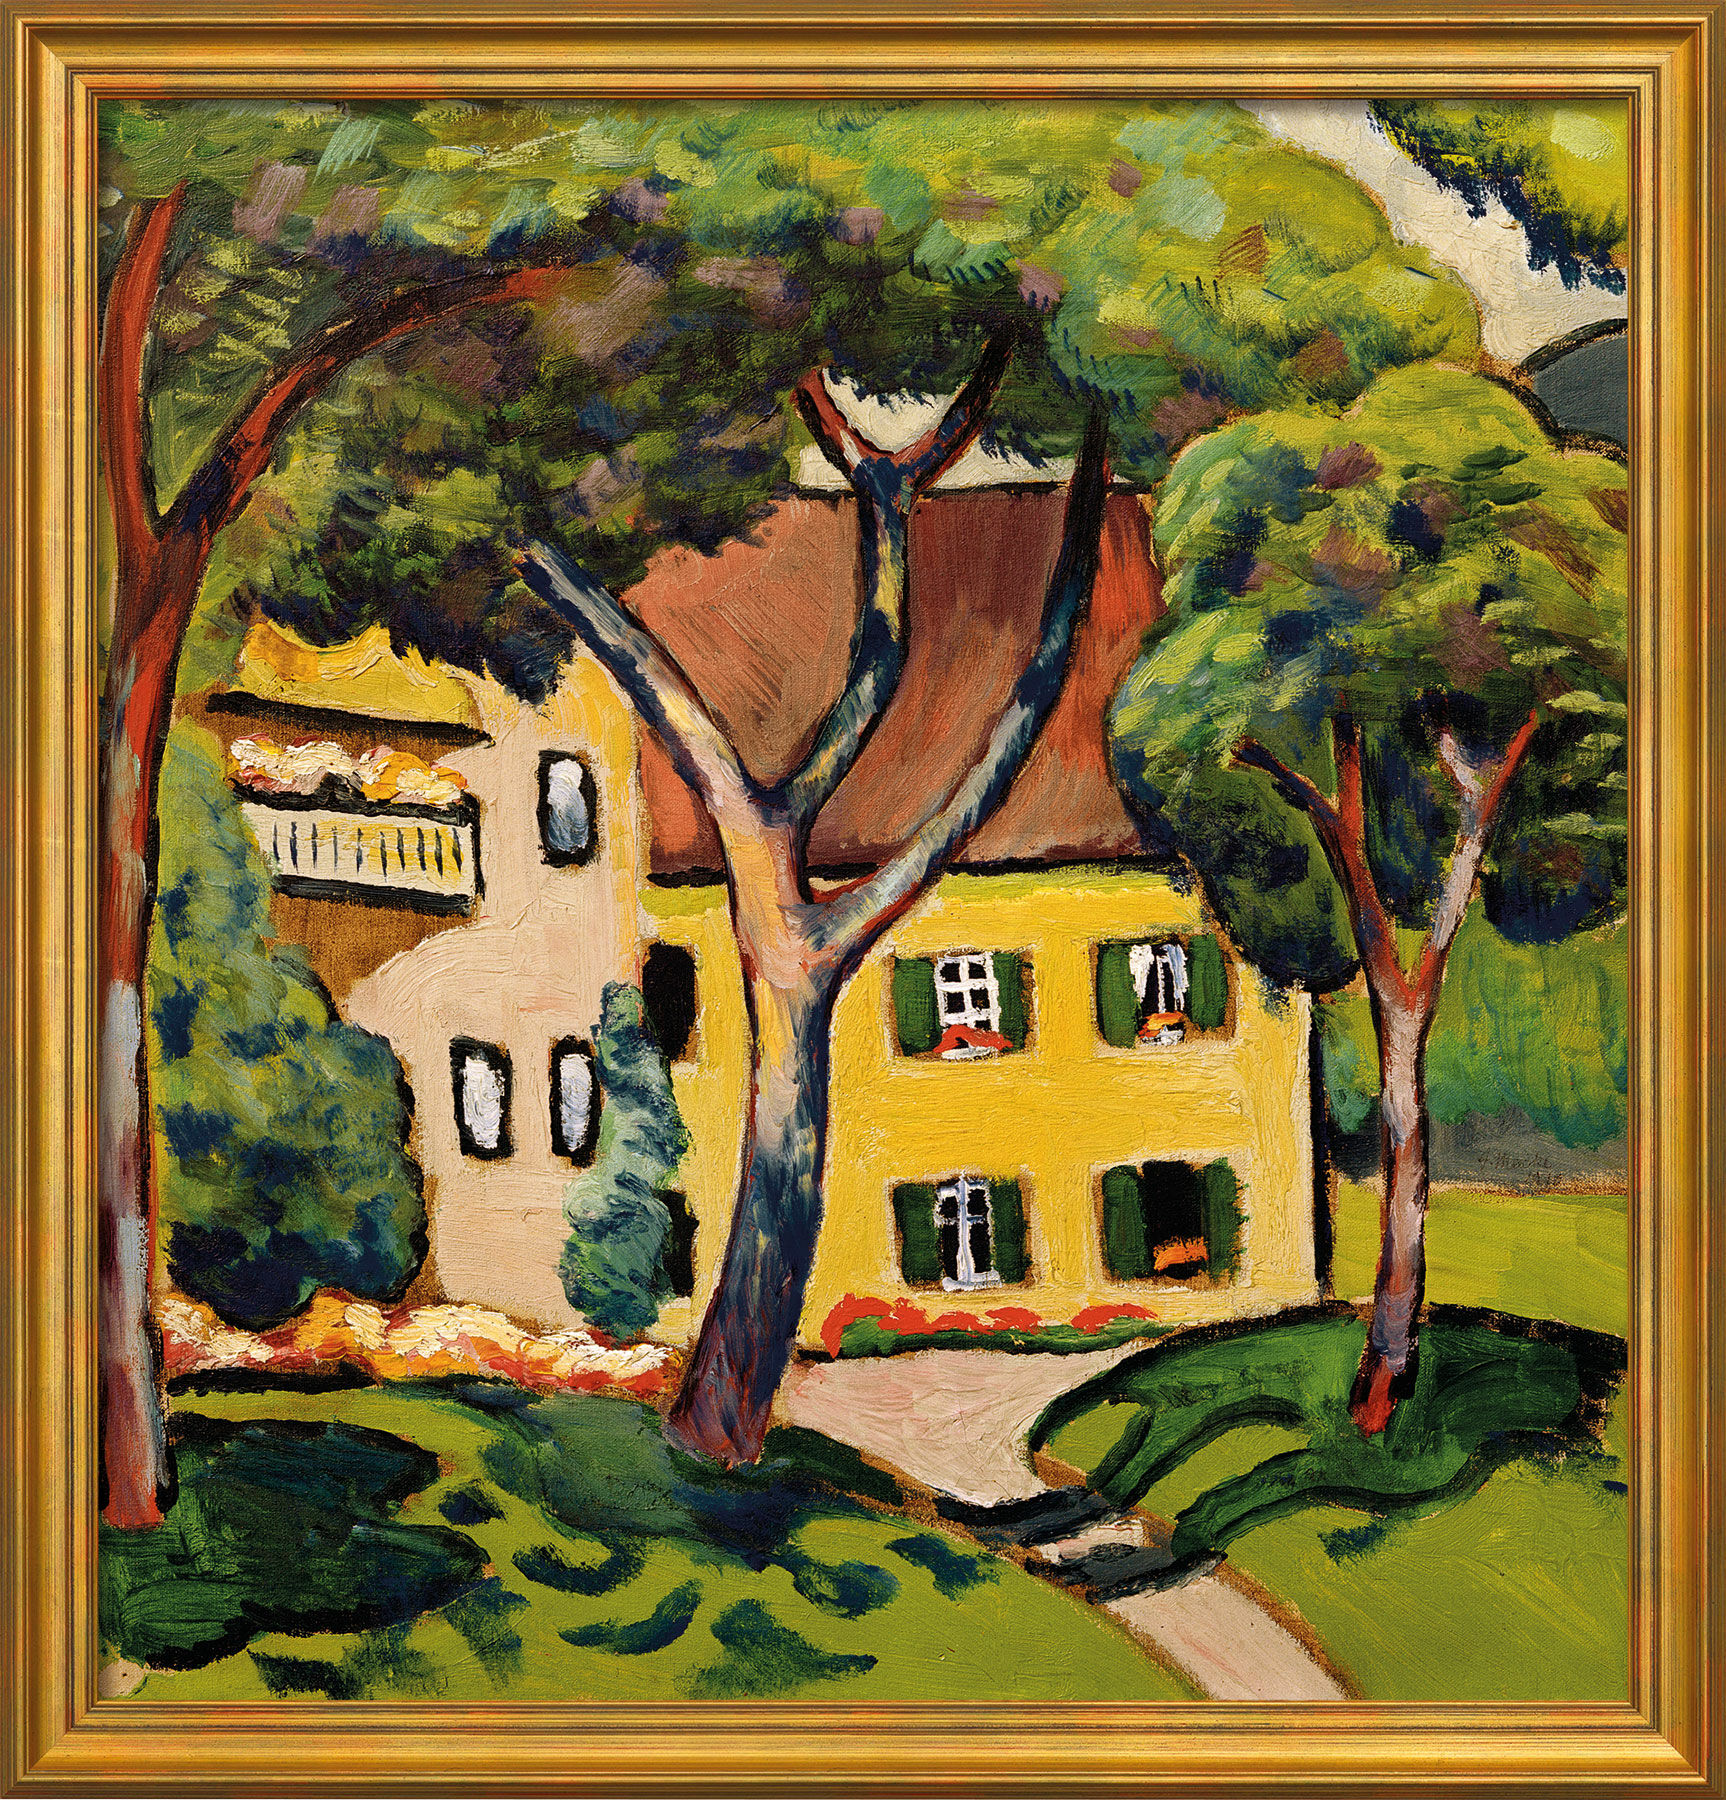 Beeld "Staudacher's huis aan de Tegernsee" (1910), goudomrande versie von August Macke